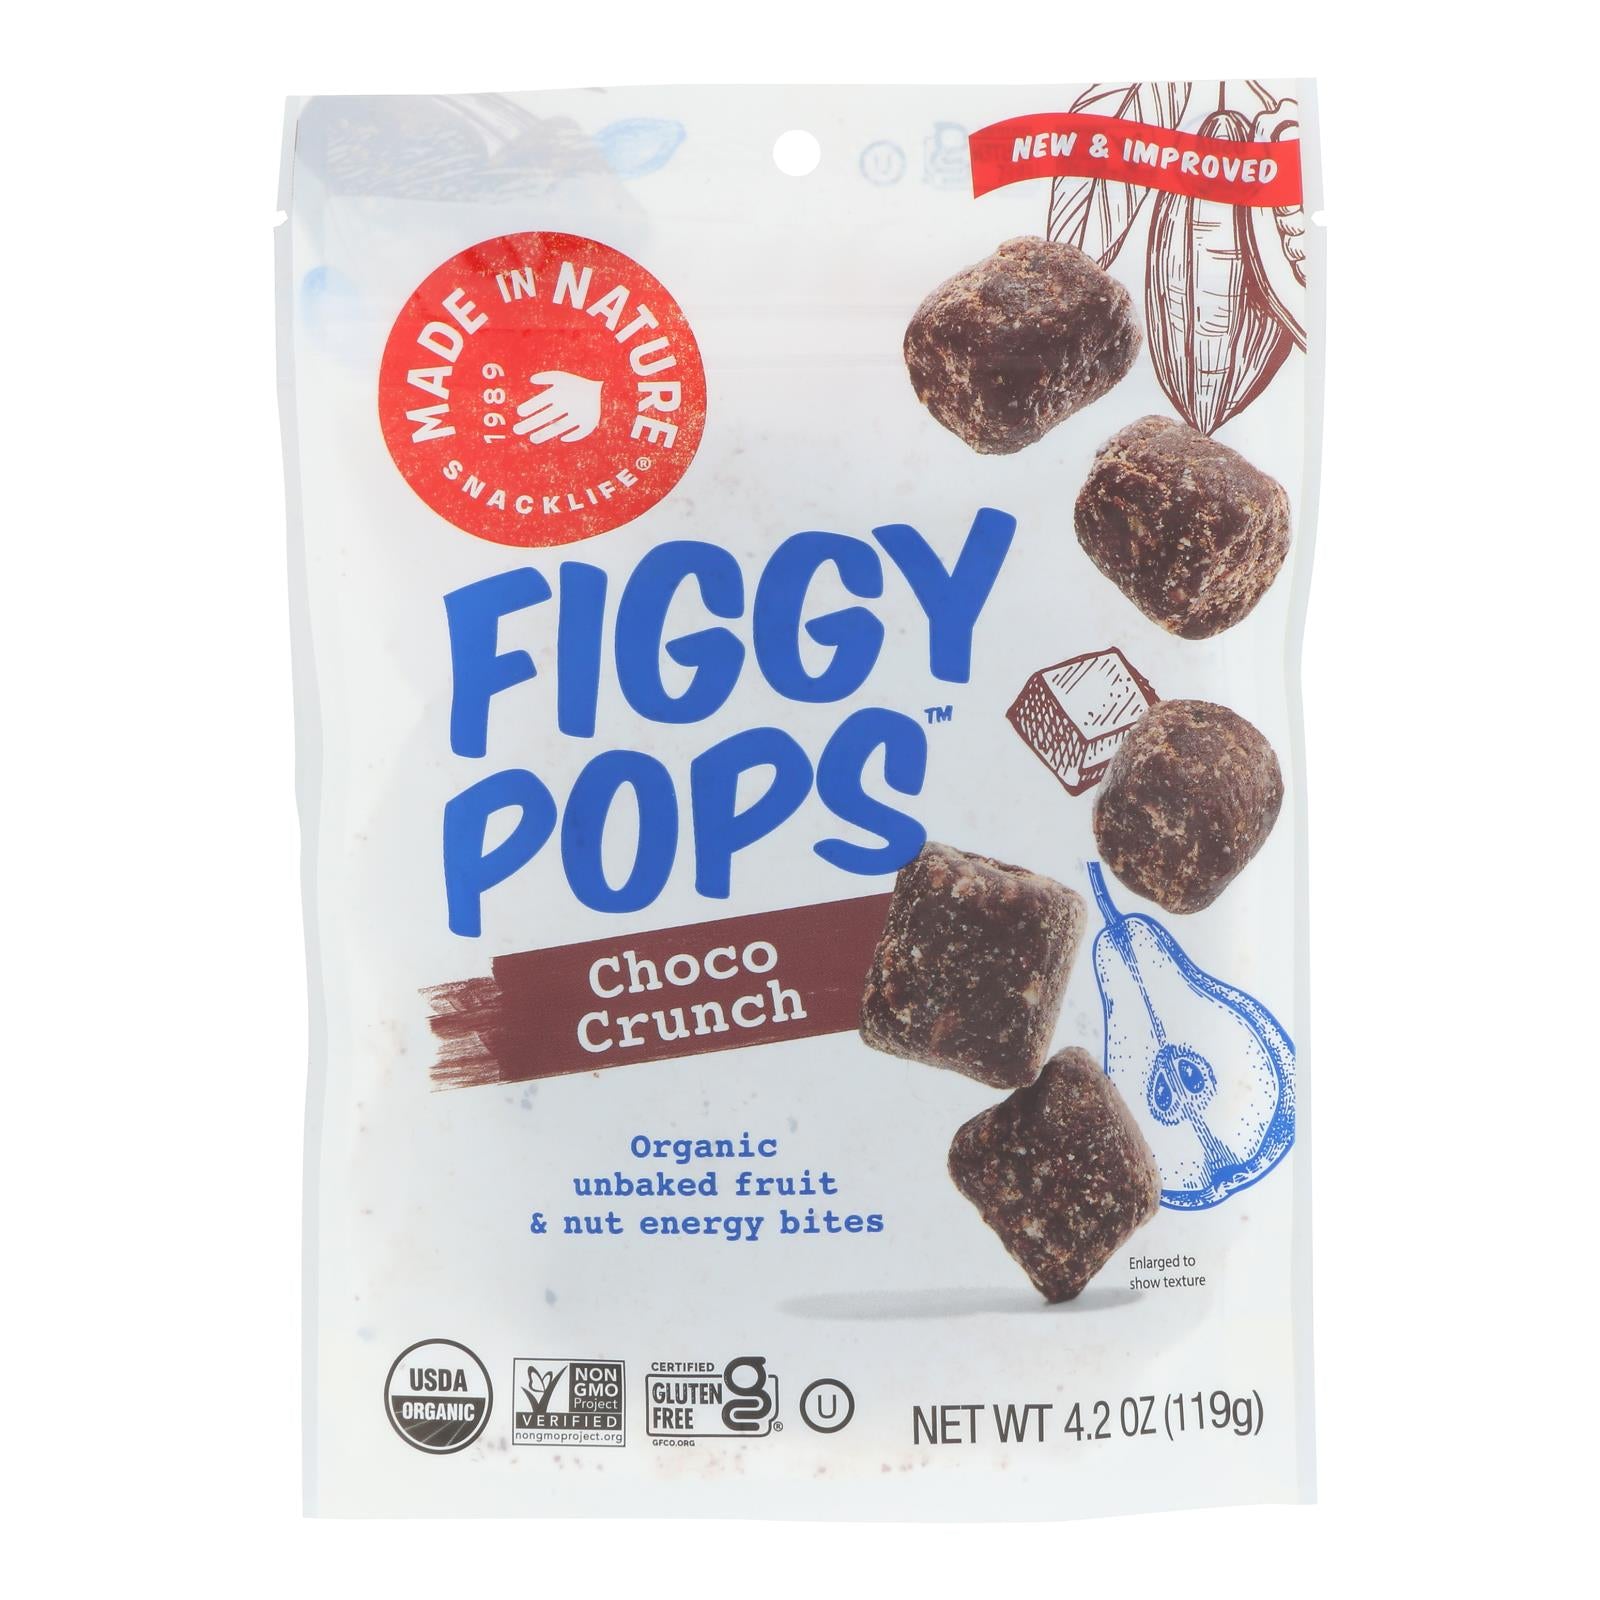 Made In Nature Figgy Pops - Choco Crunch - Case Of 6 - 4.2 Oz